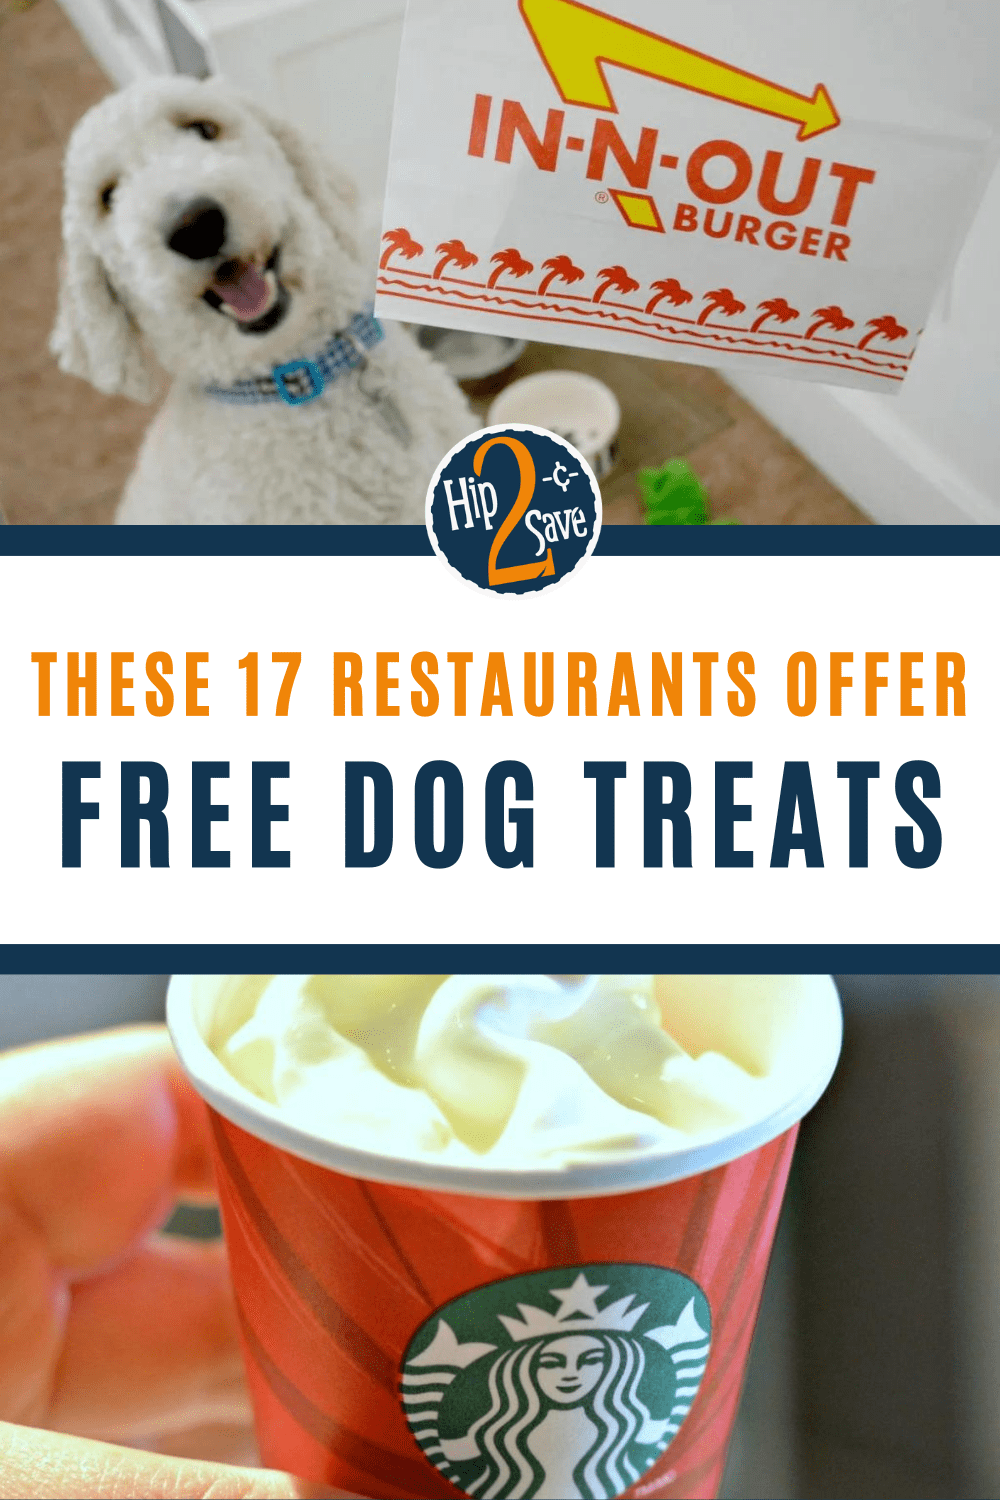  GoSports Pets PupsCream Parlor - Non-Slip Frozen Dog Treat & Ice  Cream Holder - Mess-Free Lick Mat Alternative, Includes 6 Reusable Cups &  Lids : Pet Supplies